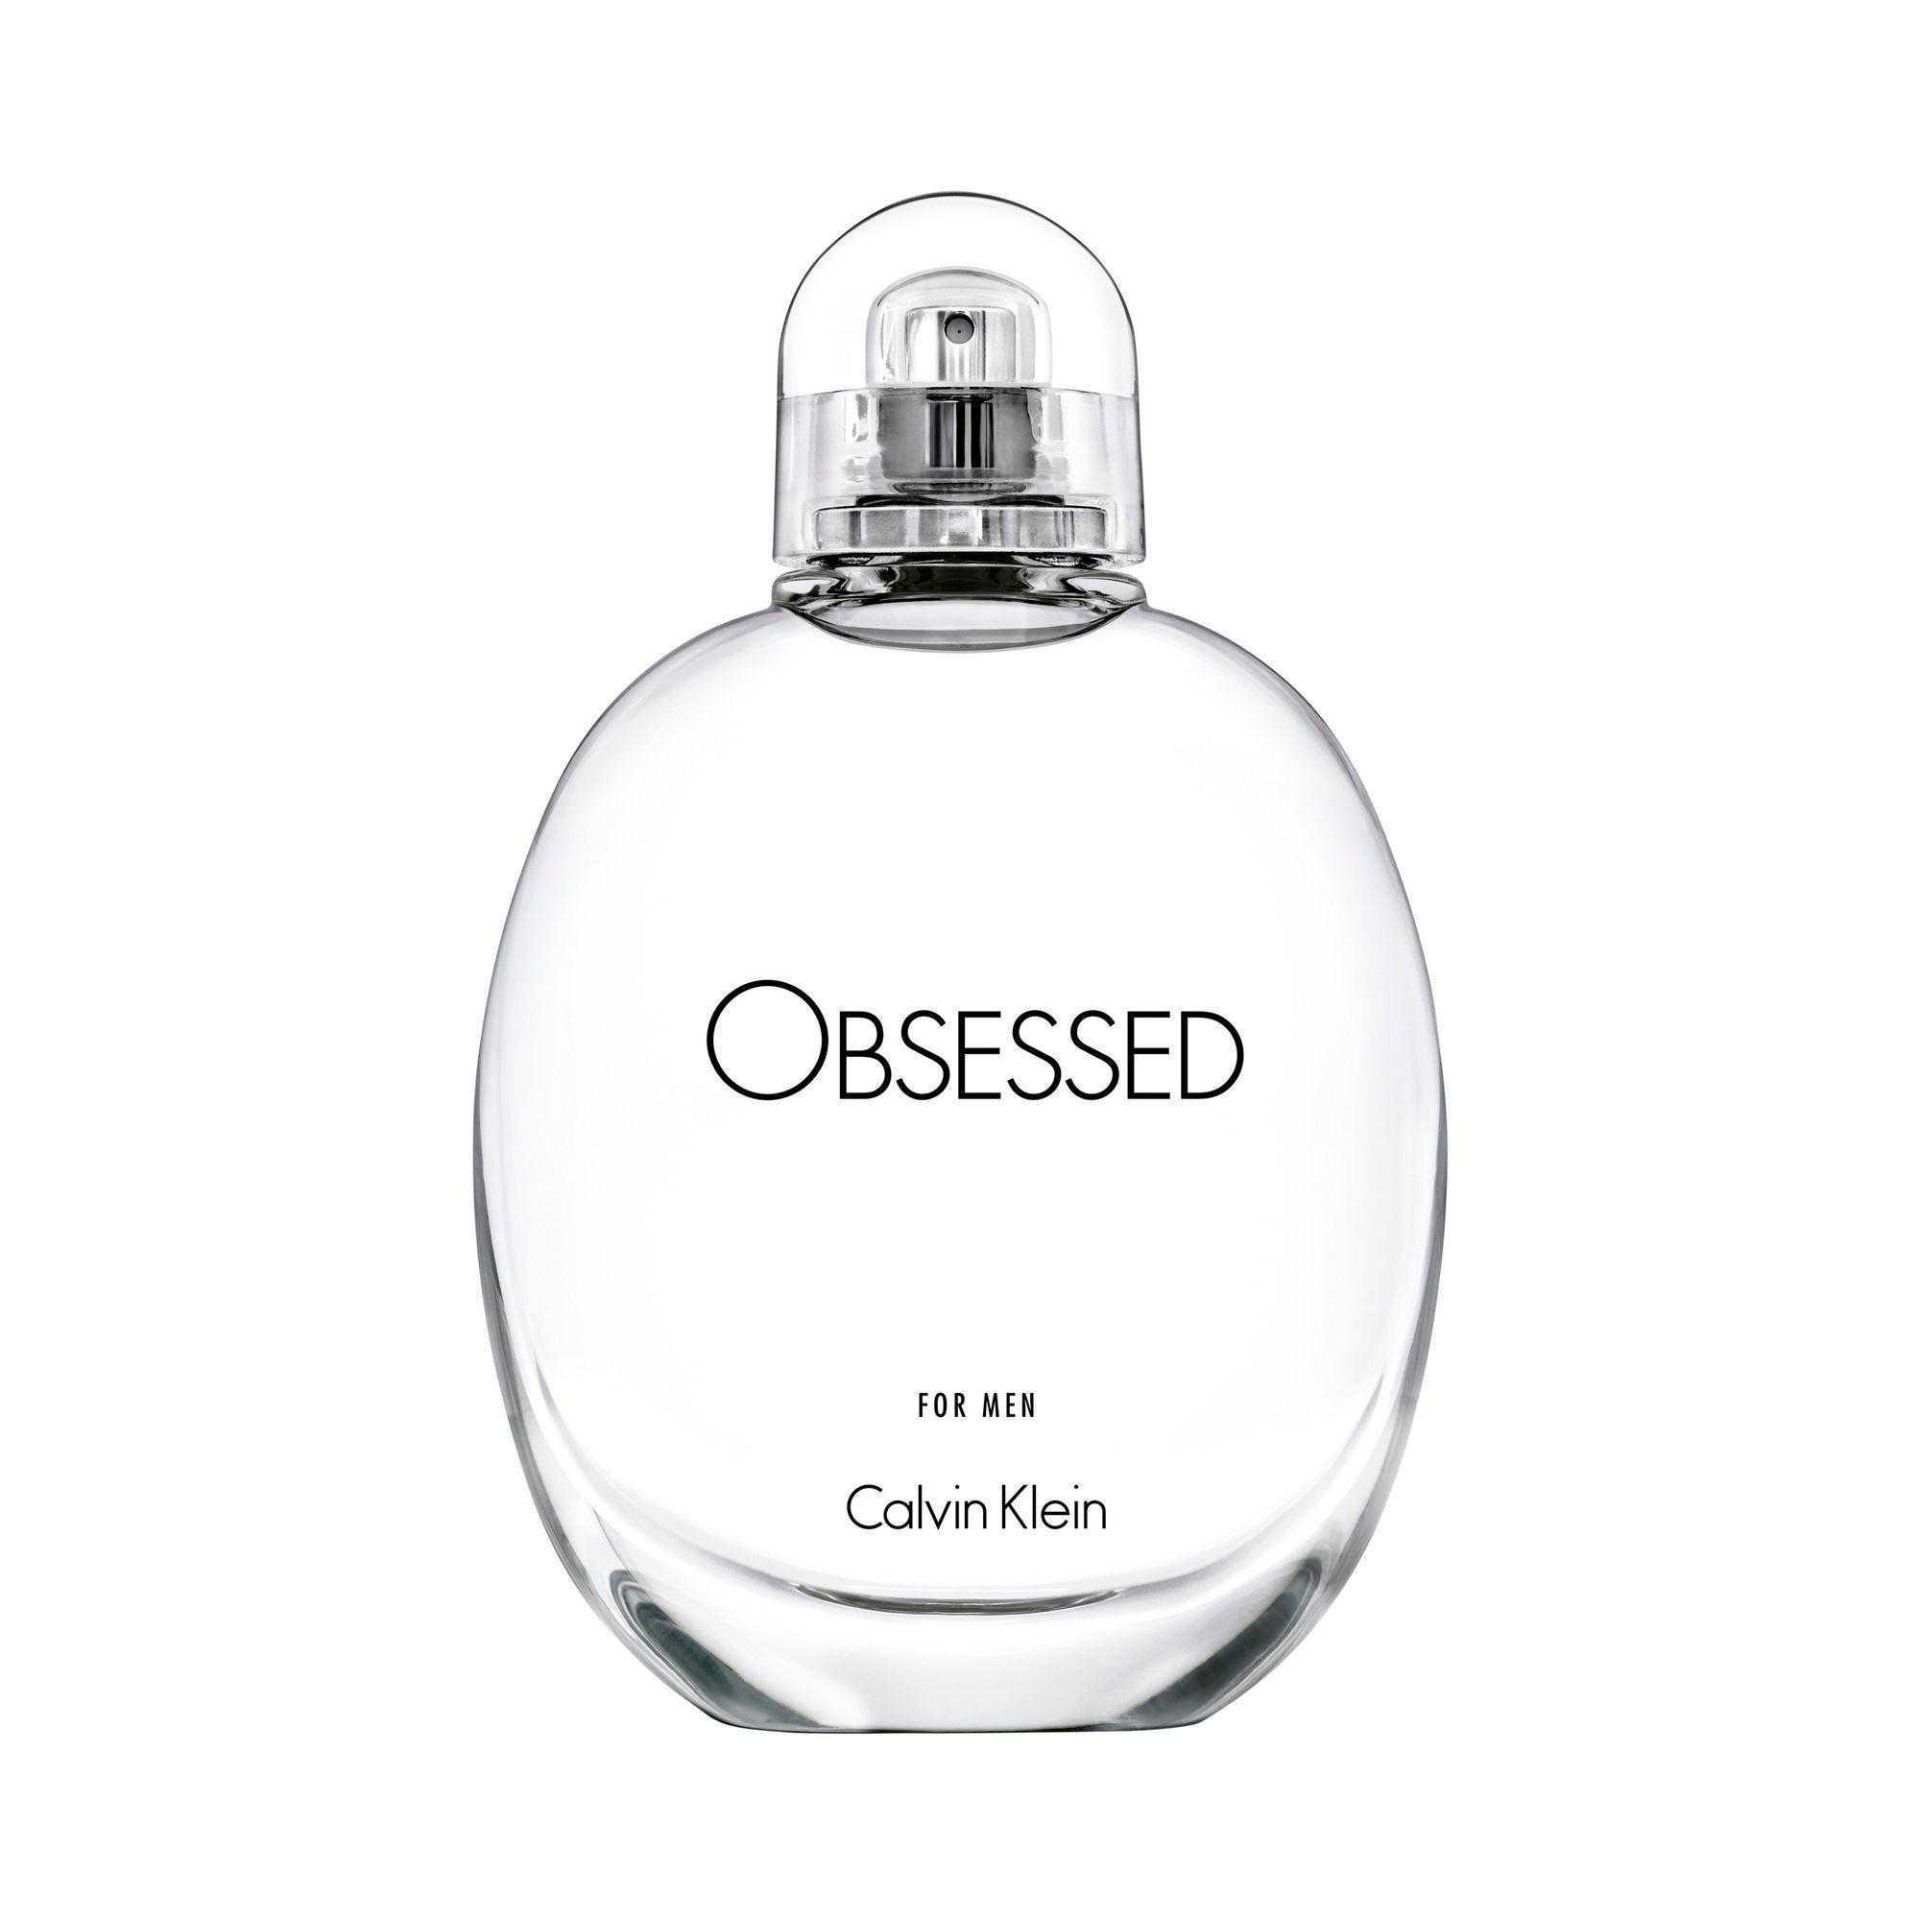 Rrp £80 Unboxed Bottle Of Calvin Klein Obsessed For Men 100Ml Eau De Toilette (Ex Display)